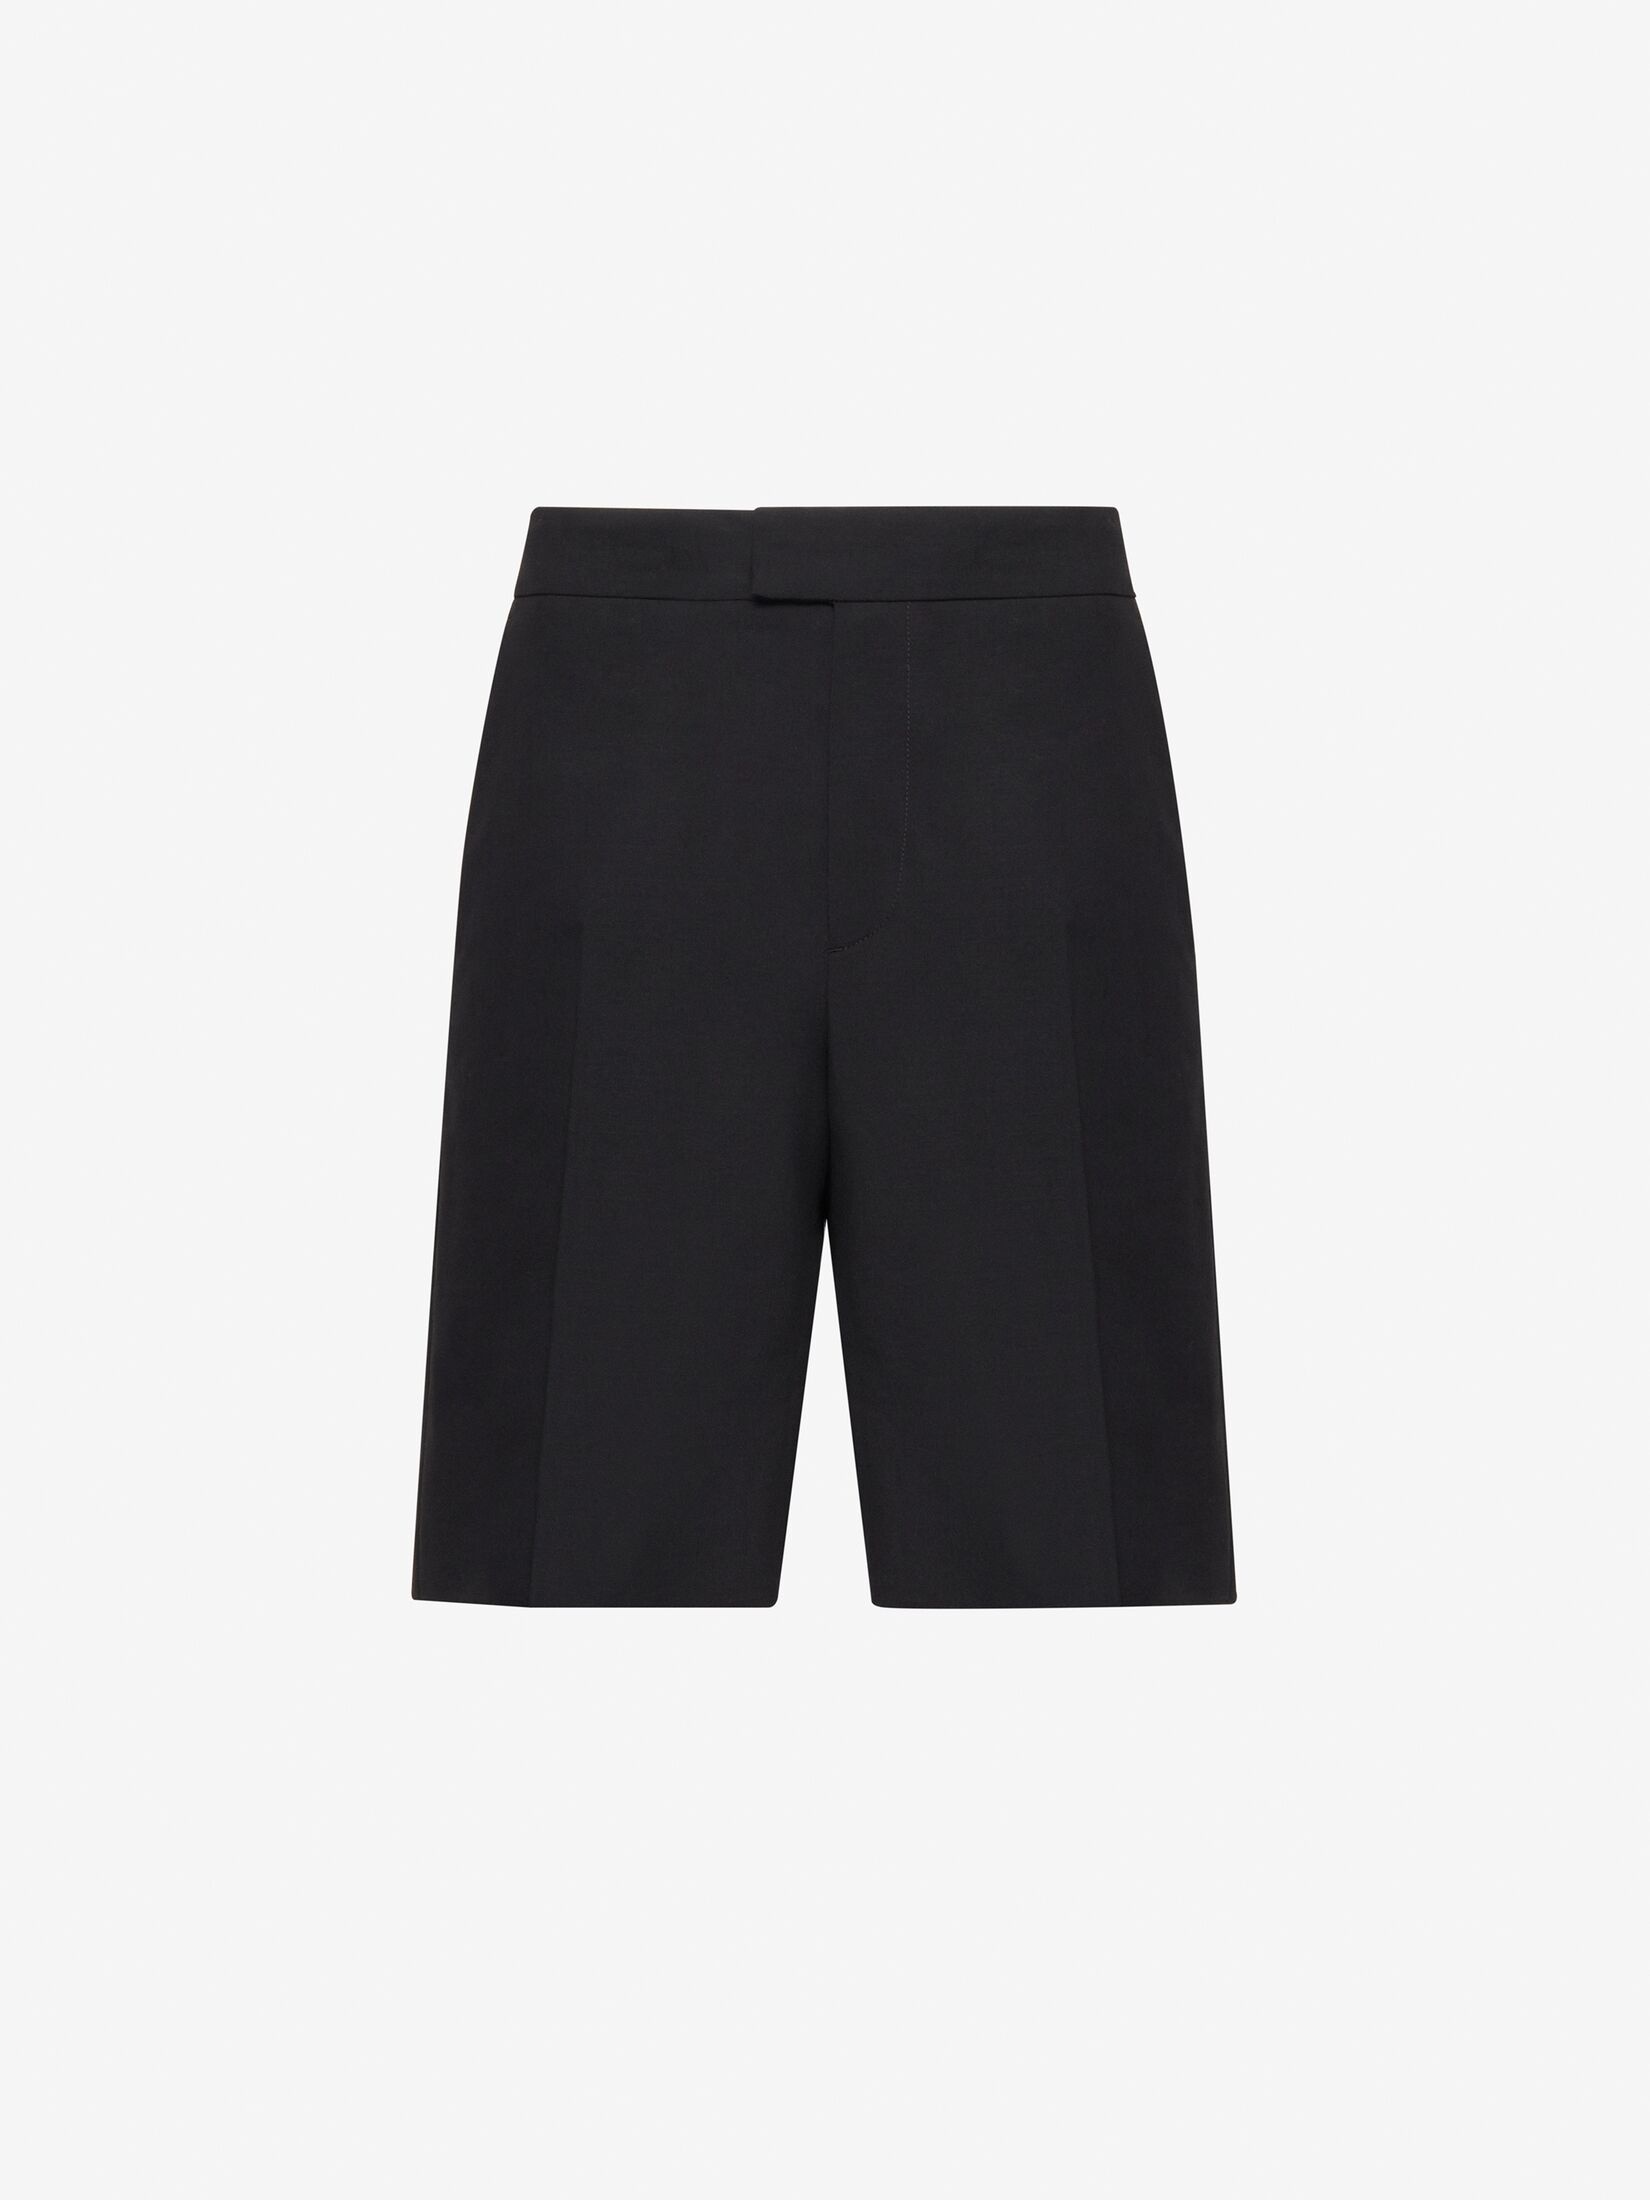 Men's Tailored Shorts in Black - 1